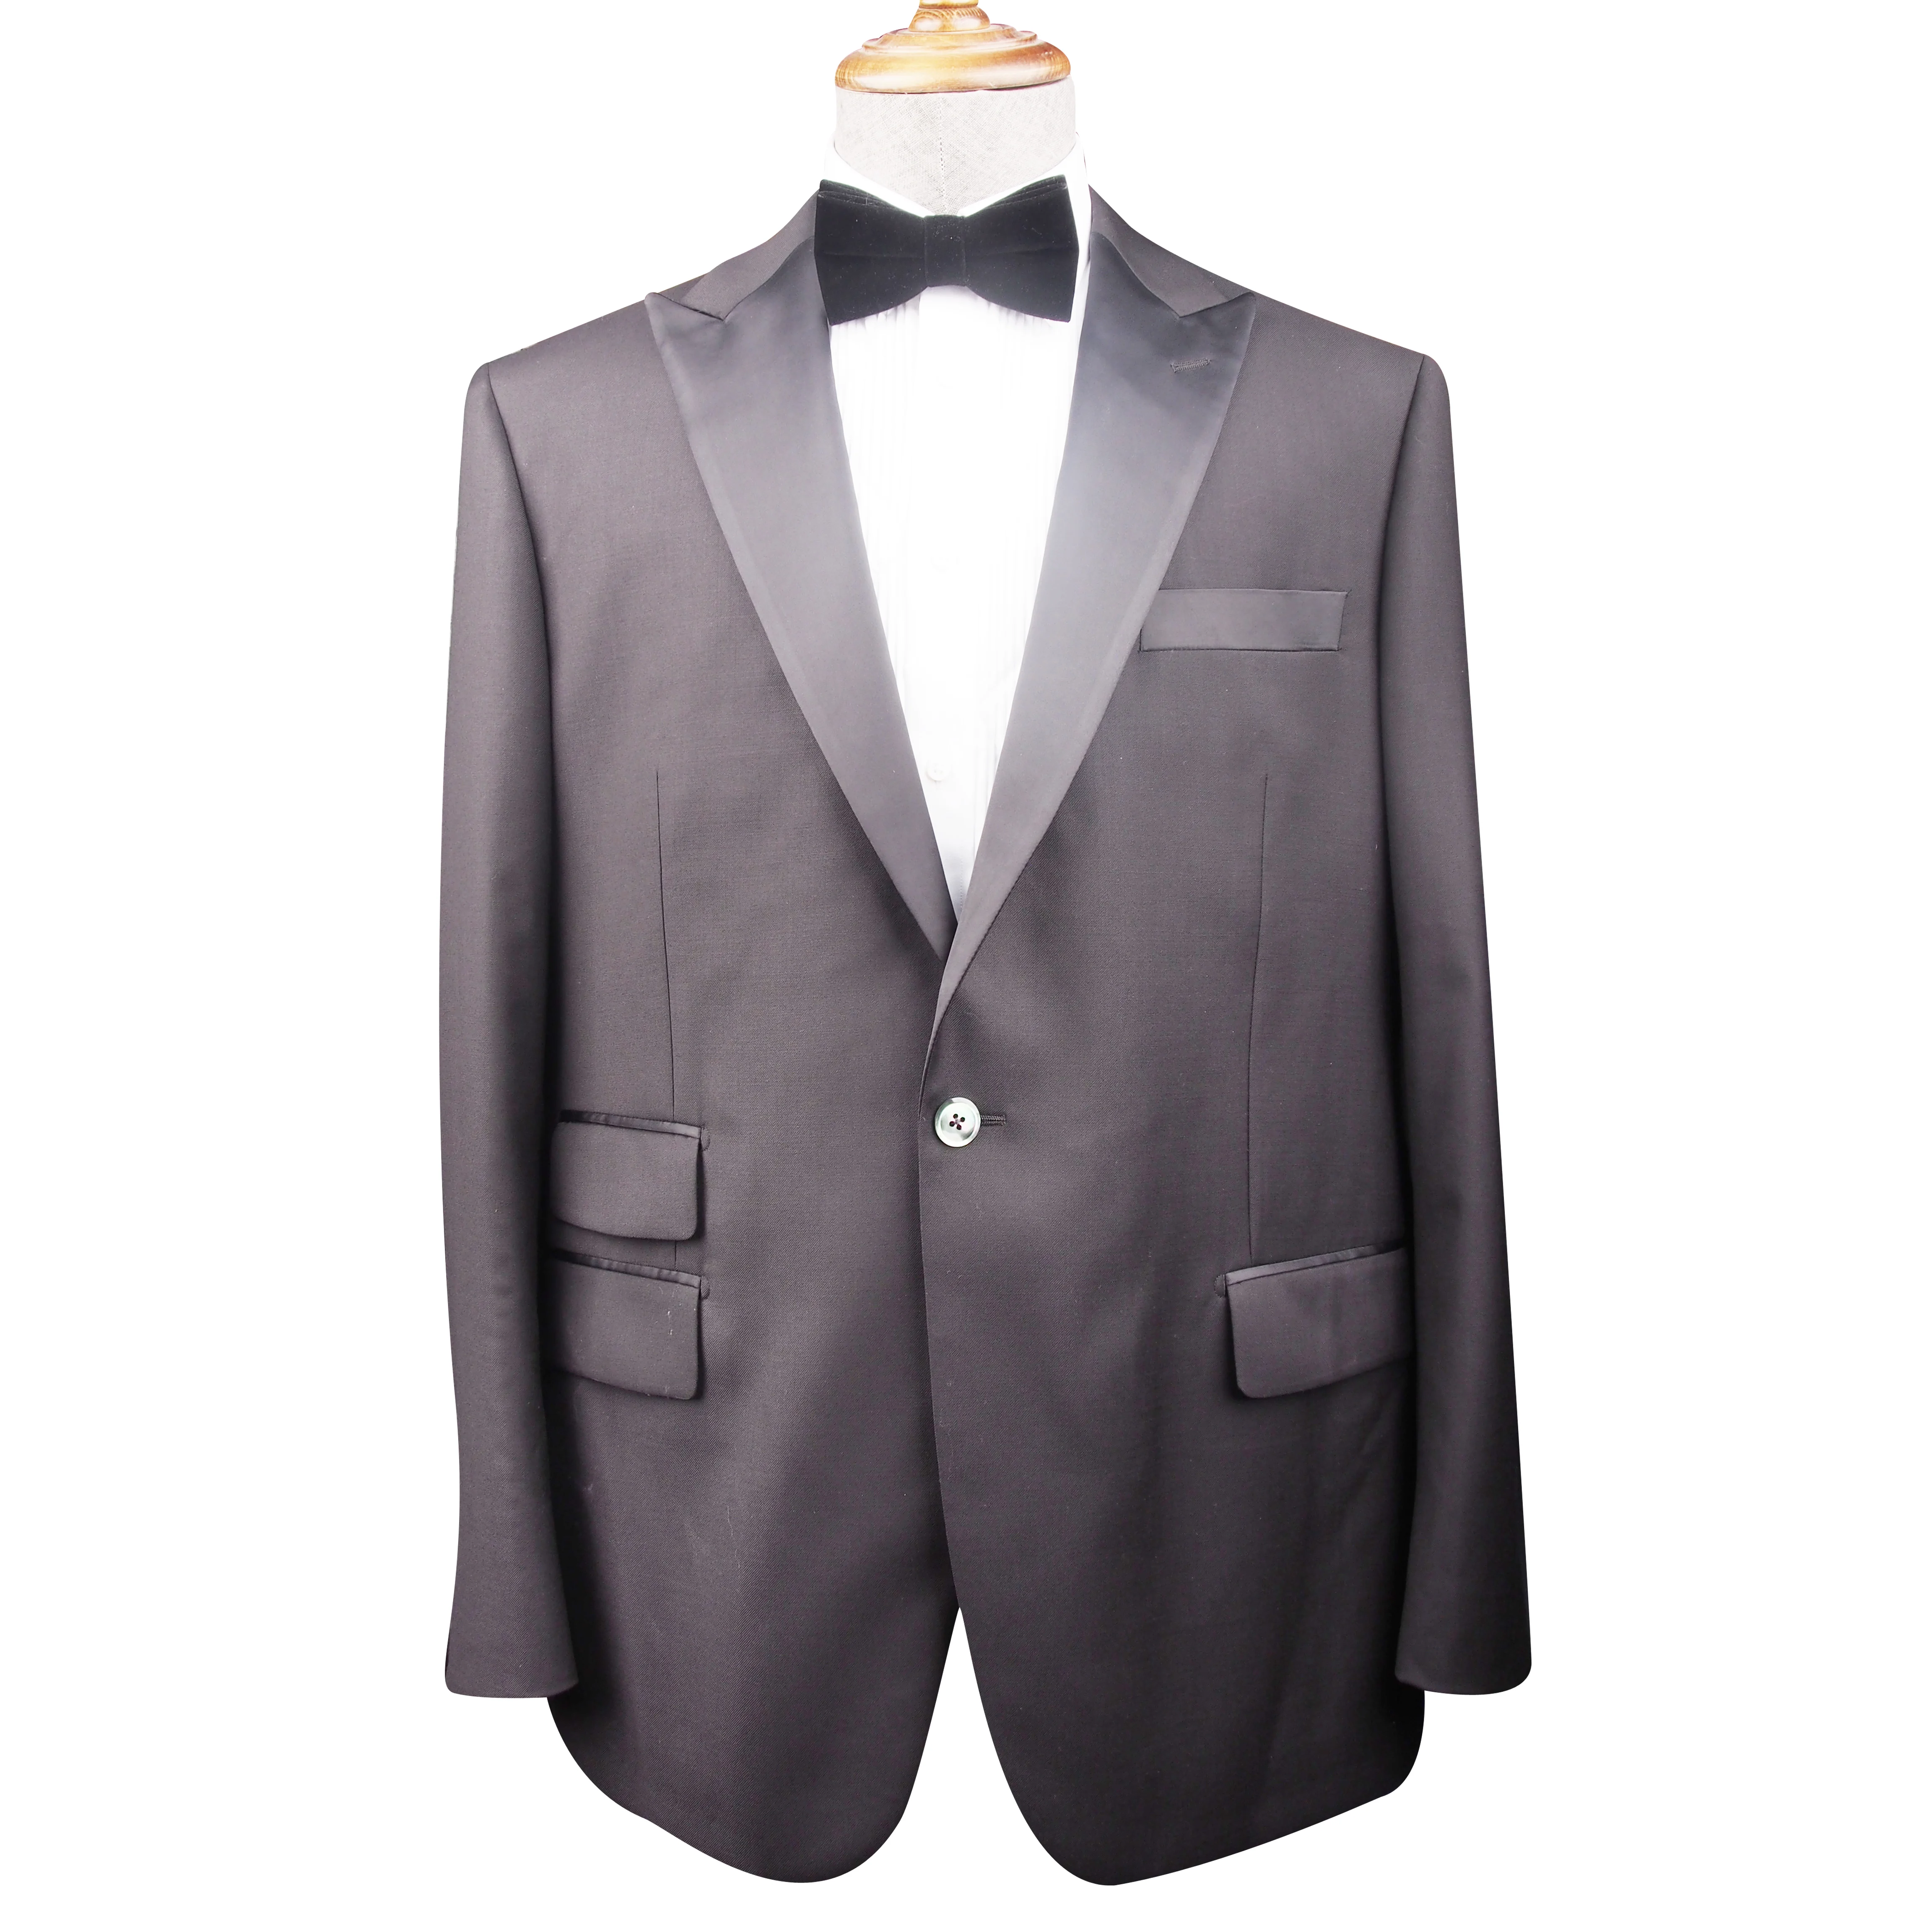 made in China wholesale 2 peças 100% Wool  Tuxedo Suit modern men’s suit